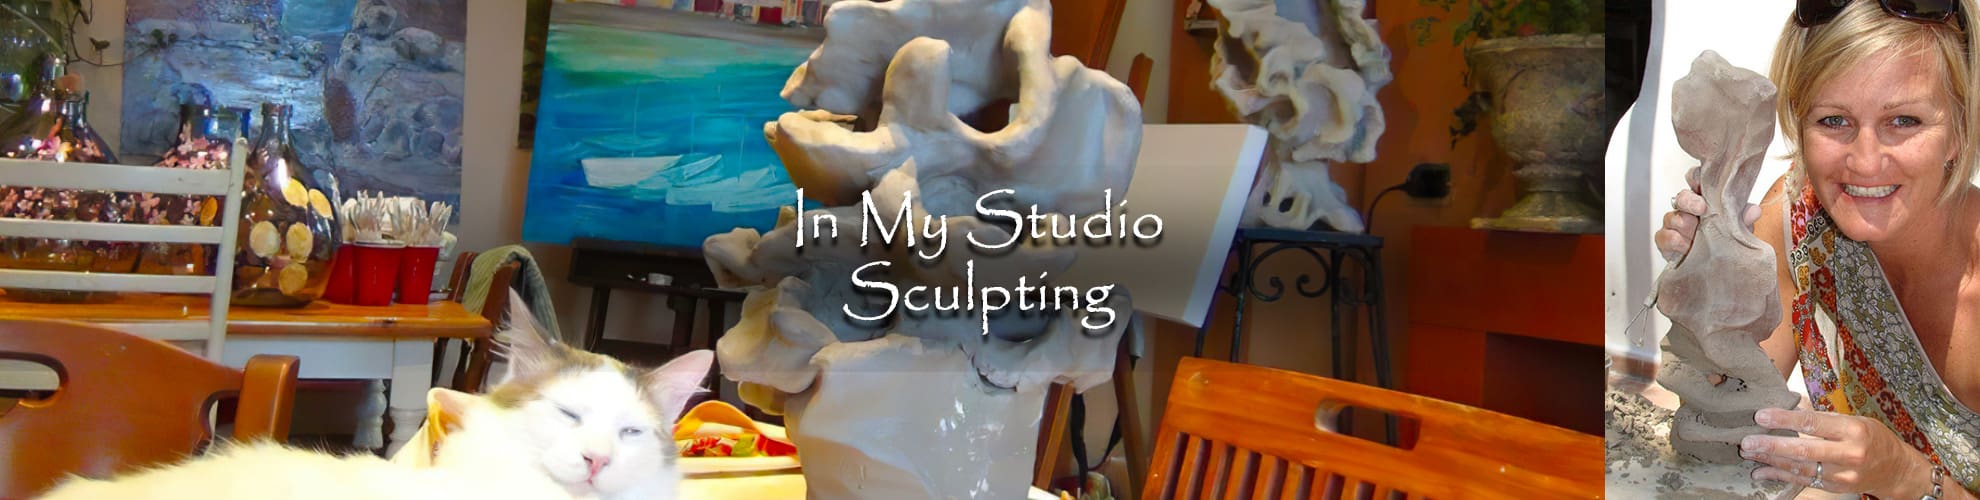 In my studio sculpting